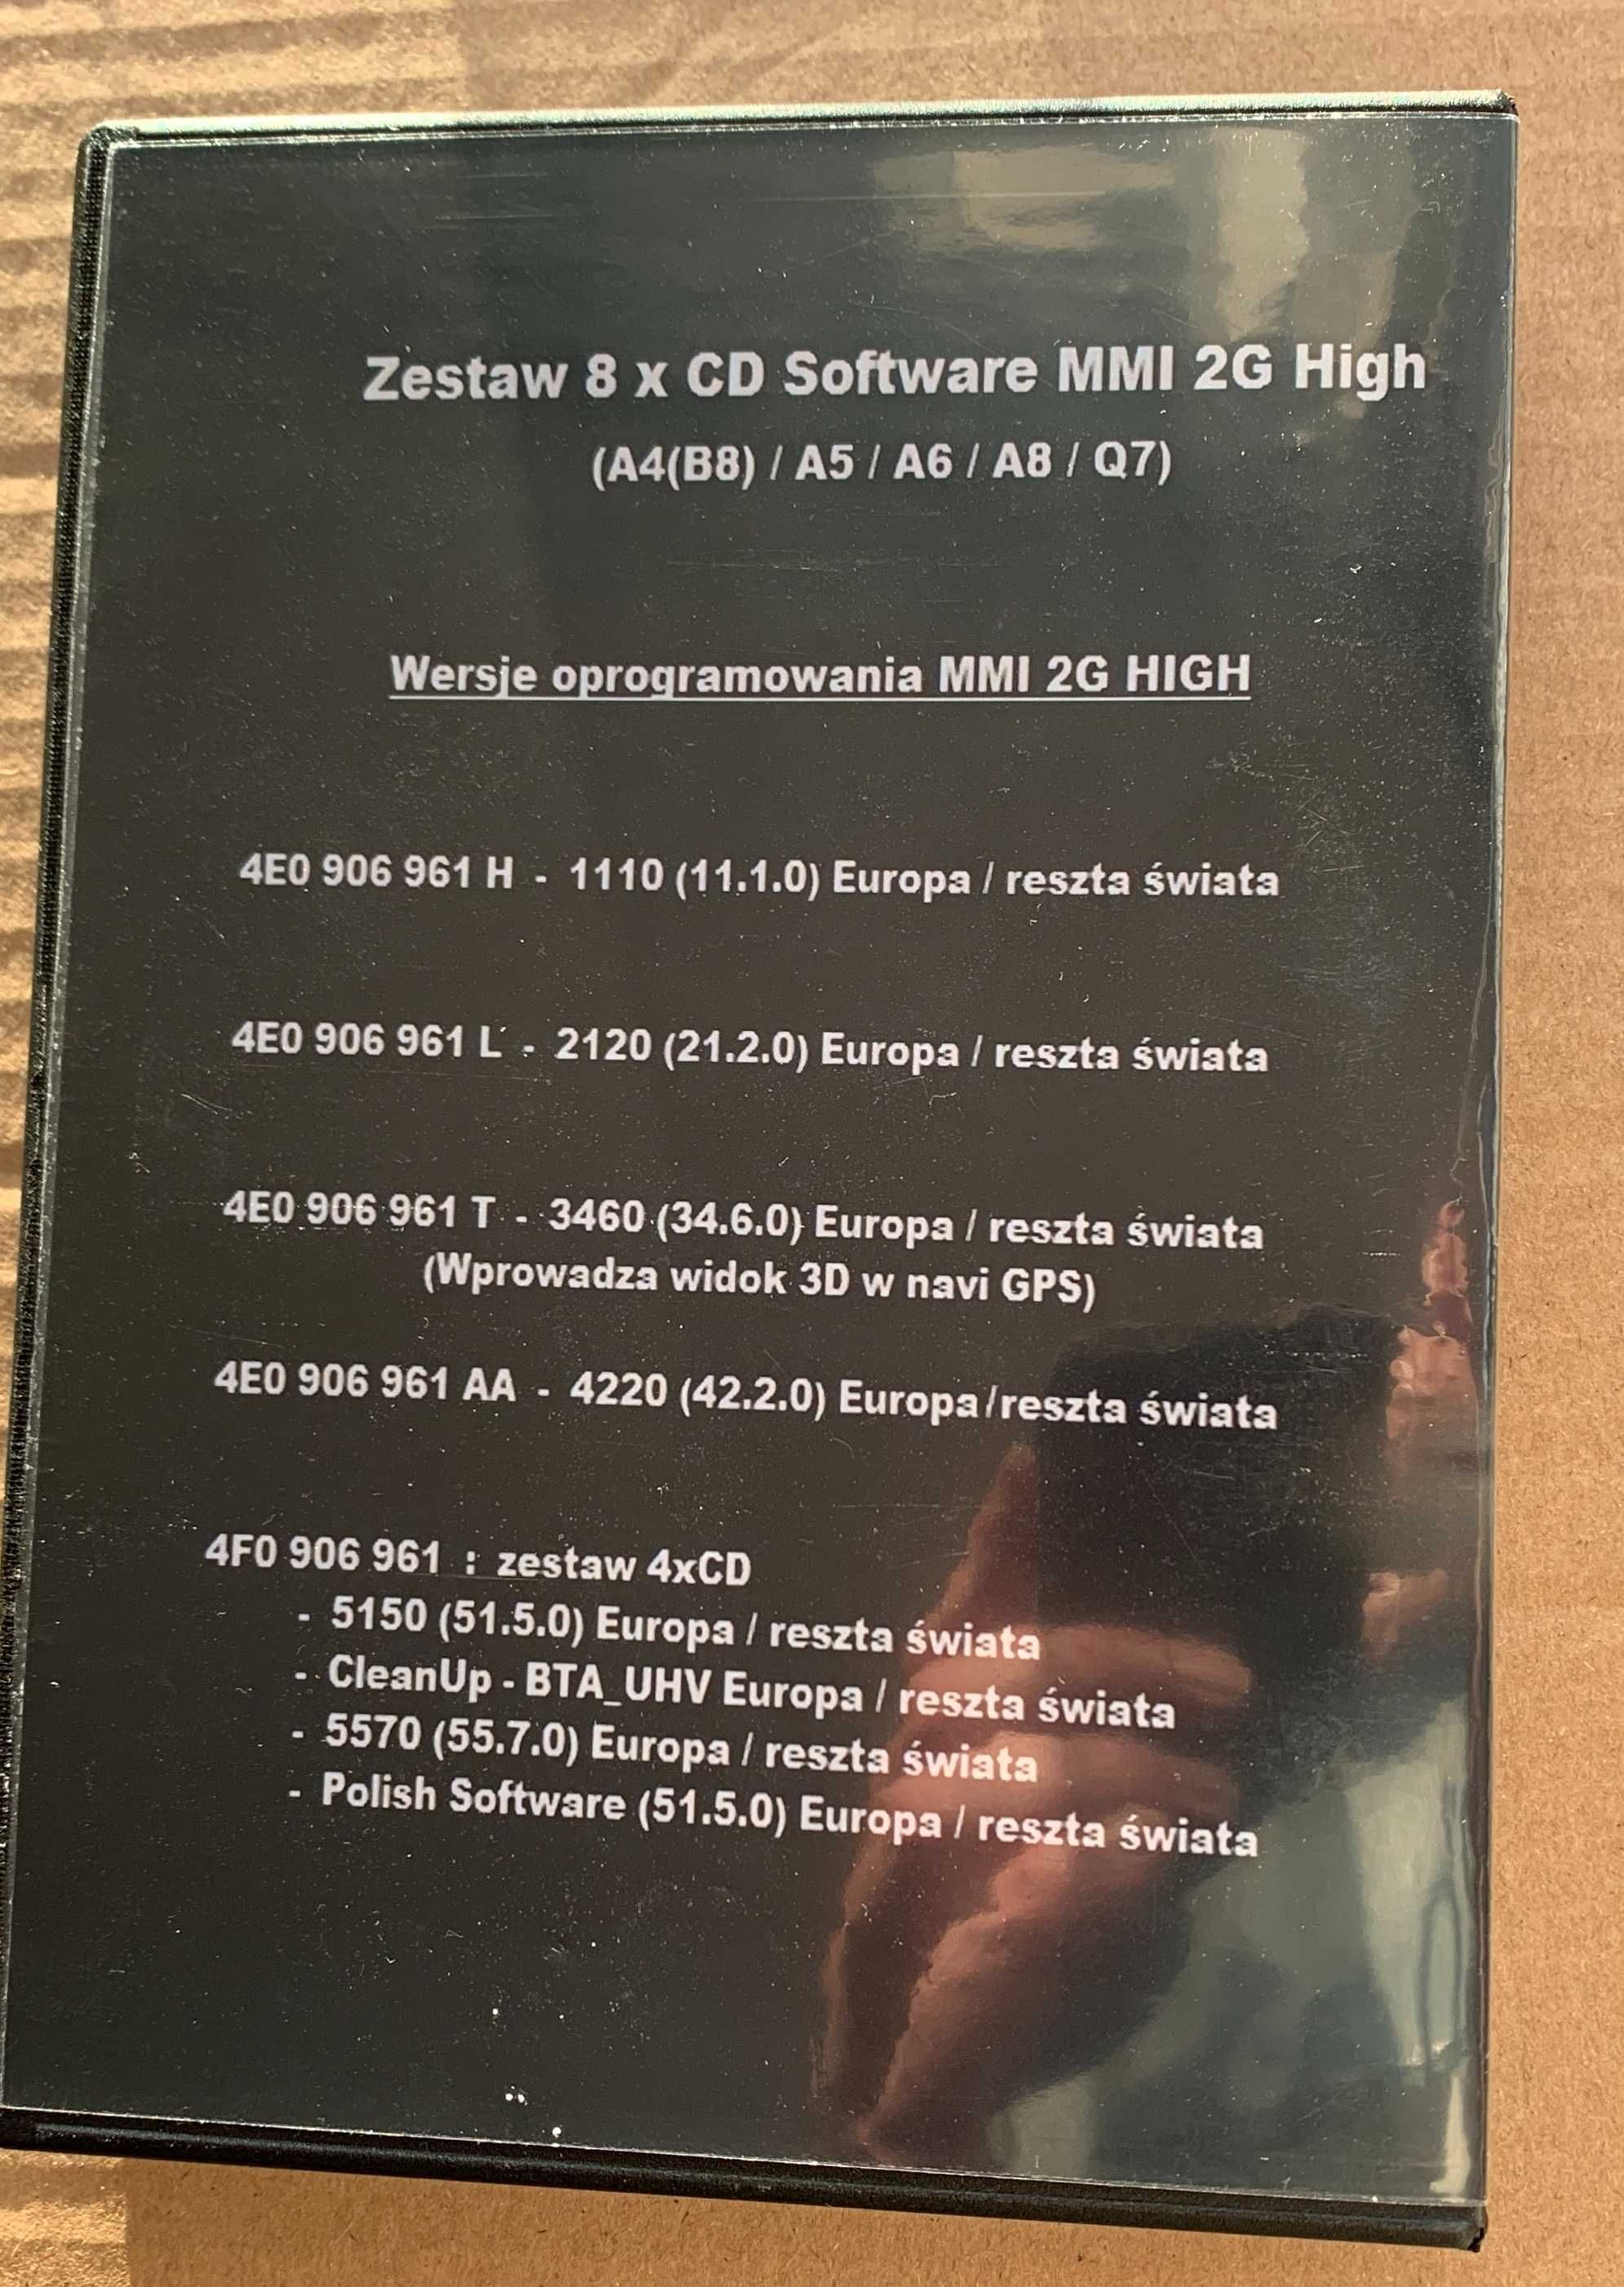 Bootloader MMI 2G High - Software wszystkie wersje - zestaw płyt